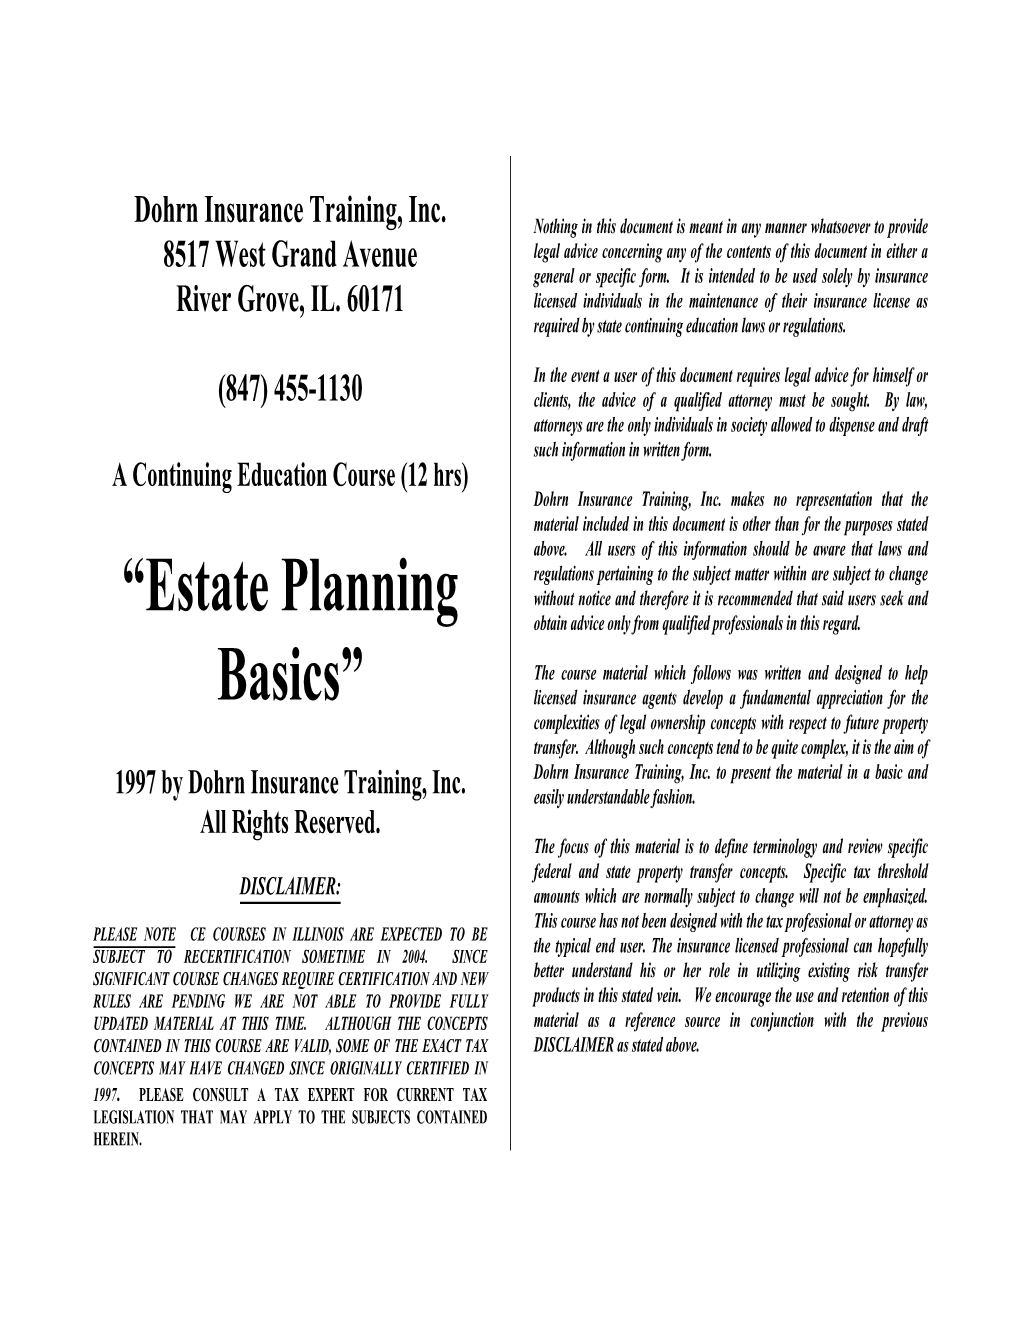 “Estate Planning Basics”